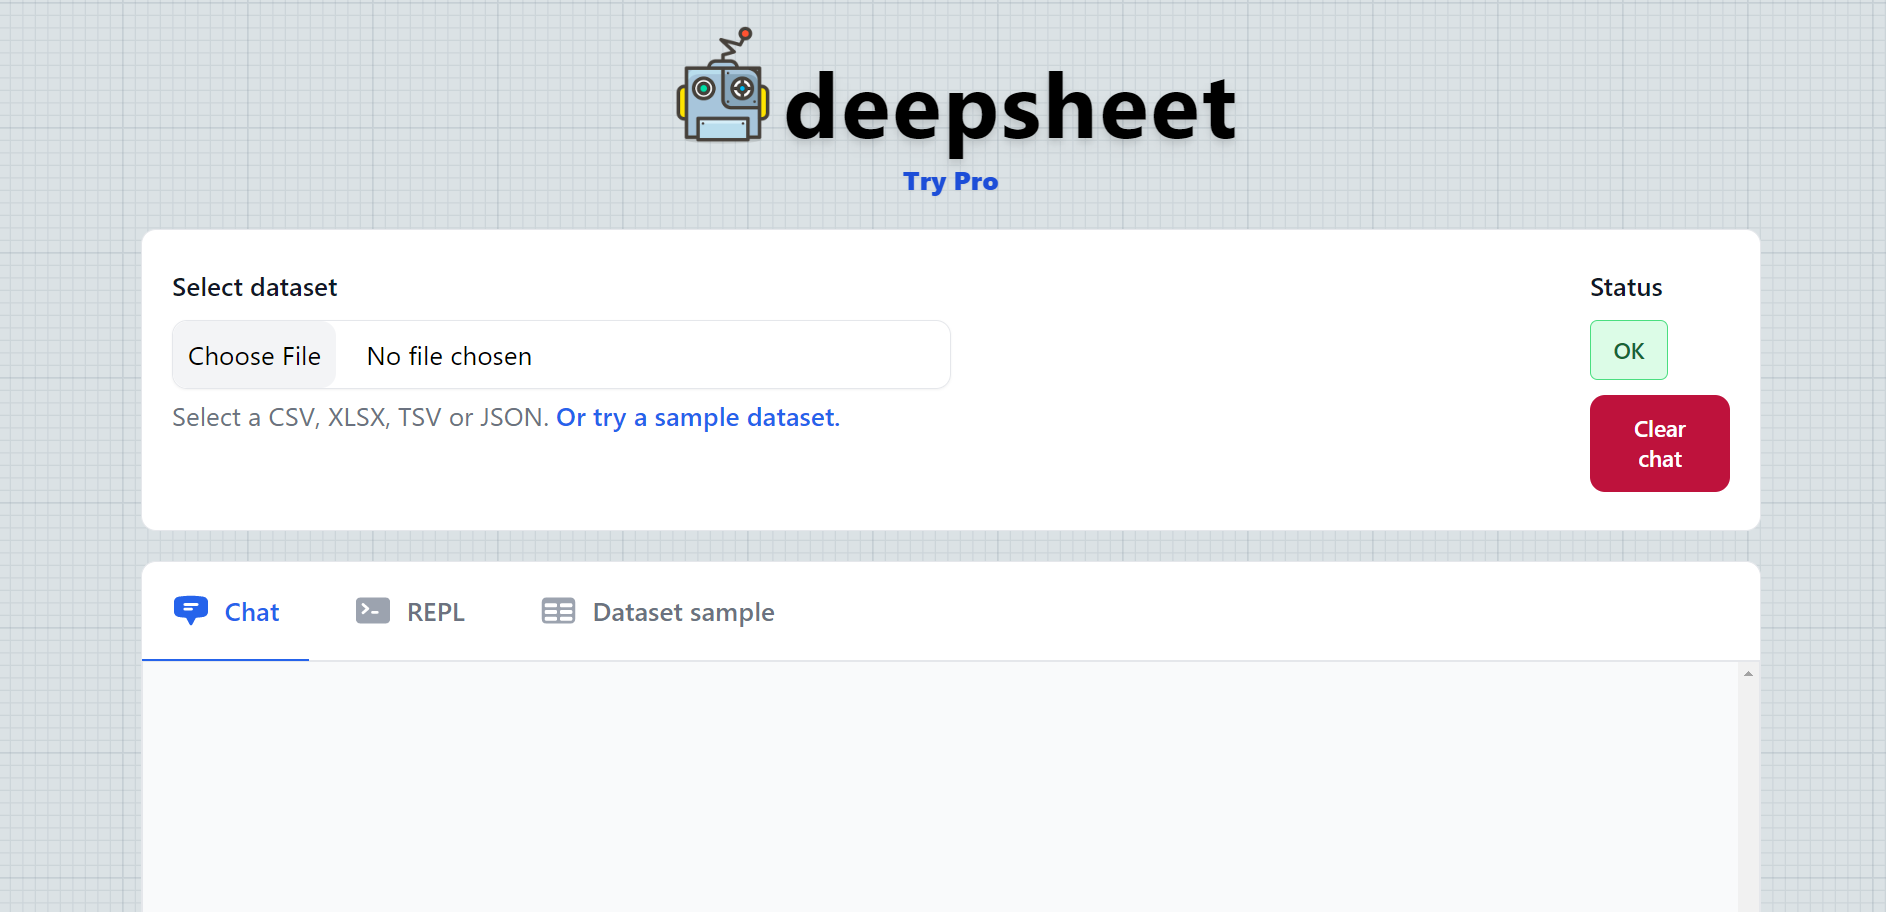 Post: Deepsheet